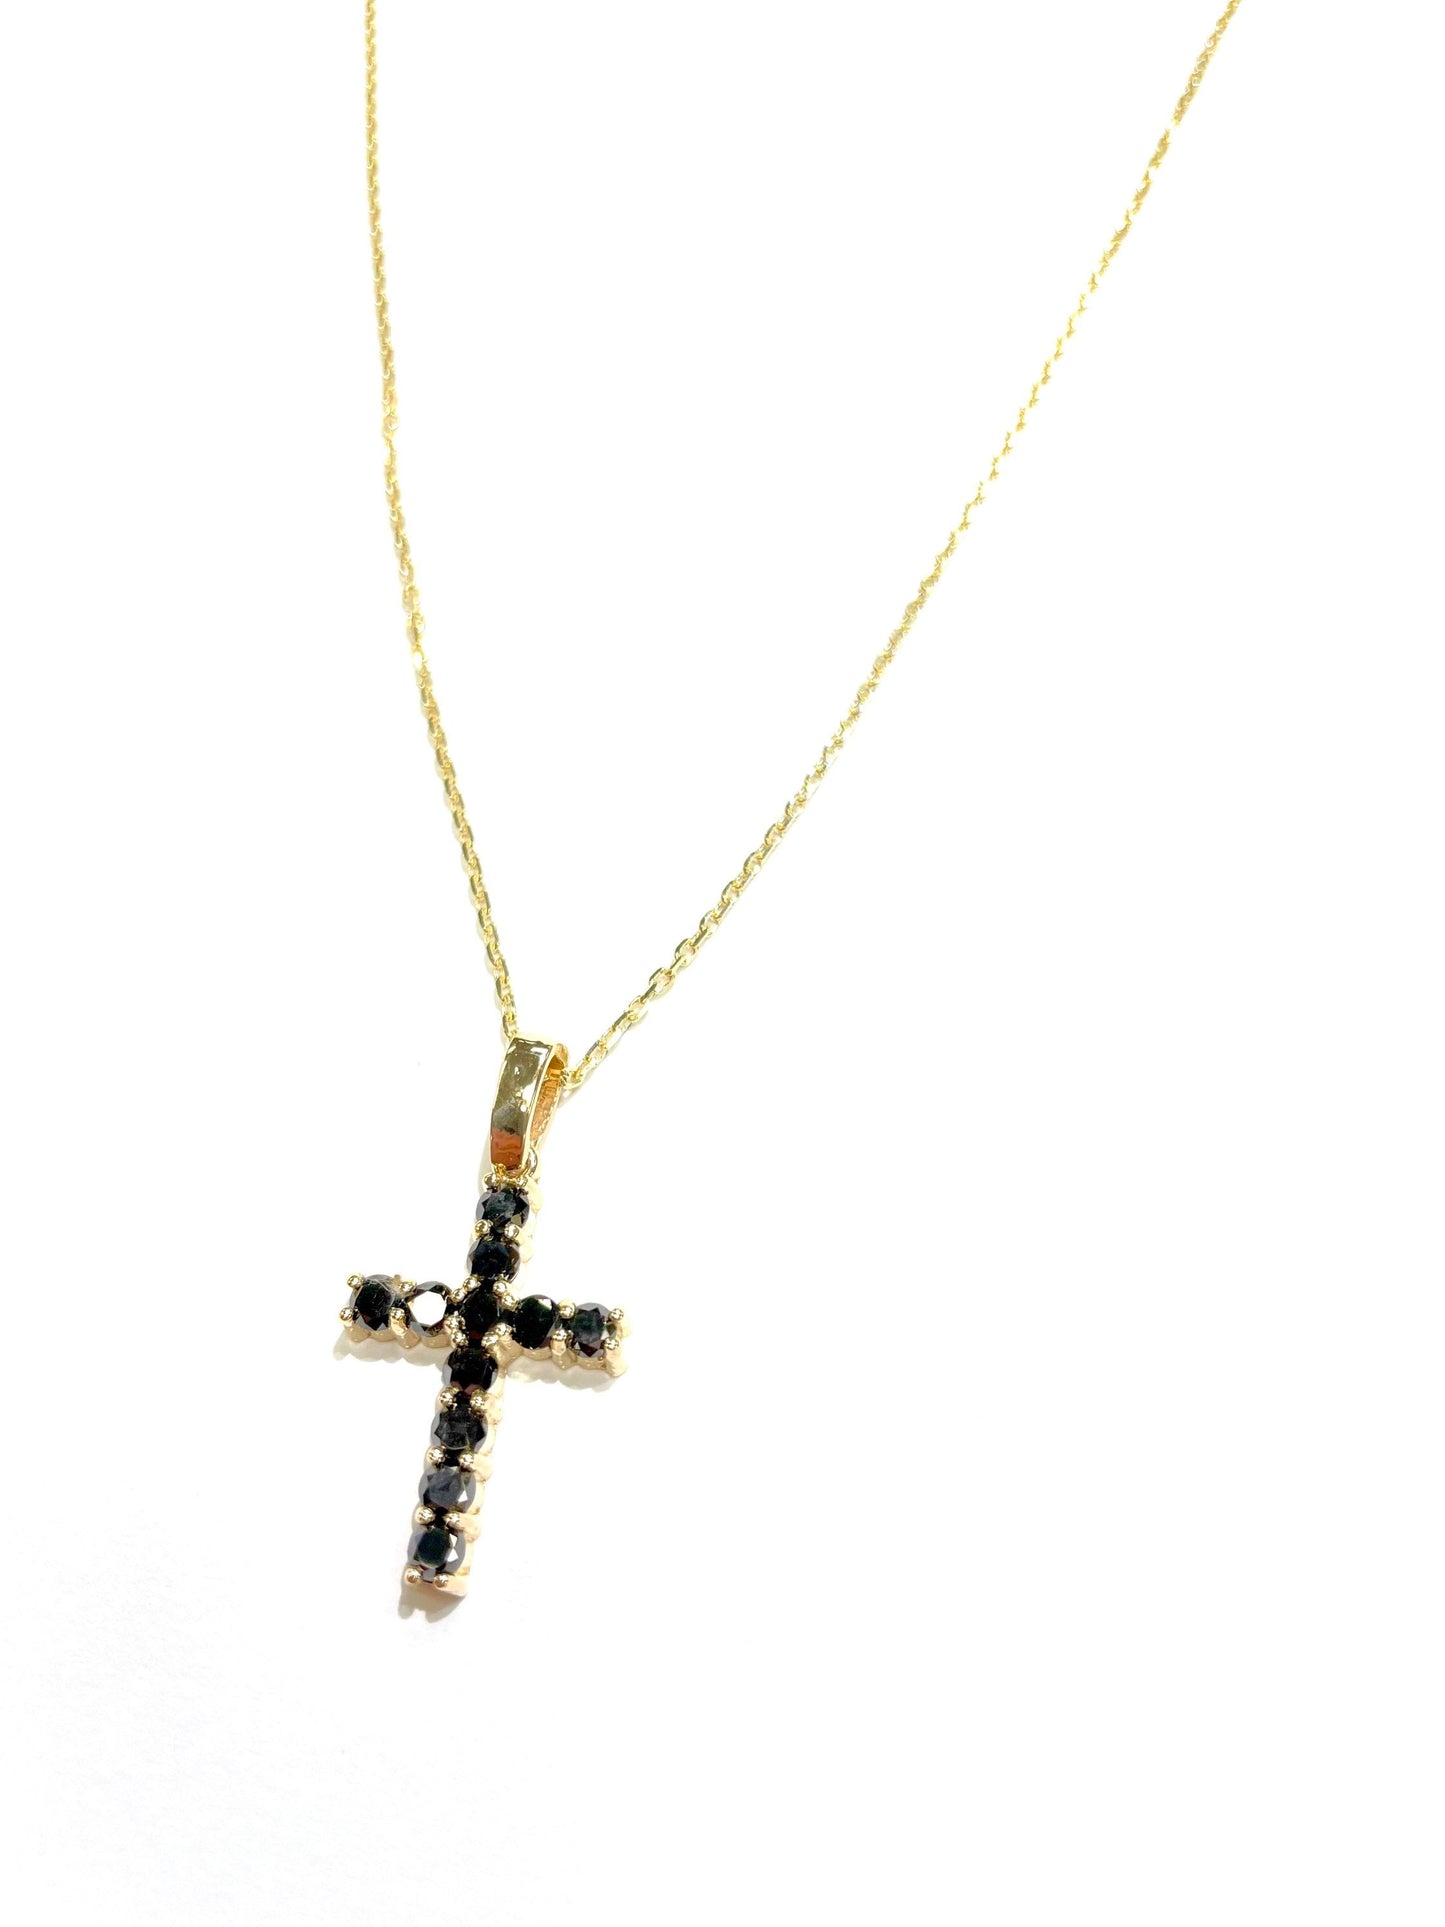 Her Black Diamond Cross Pendant